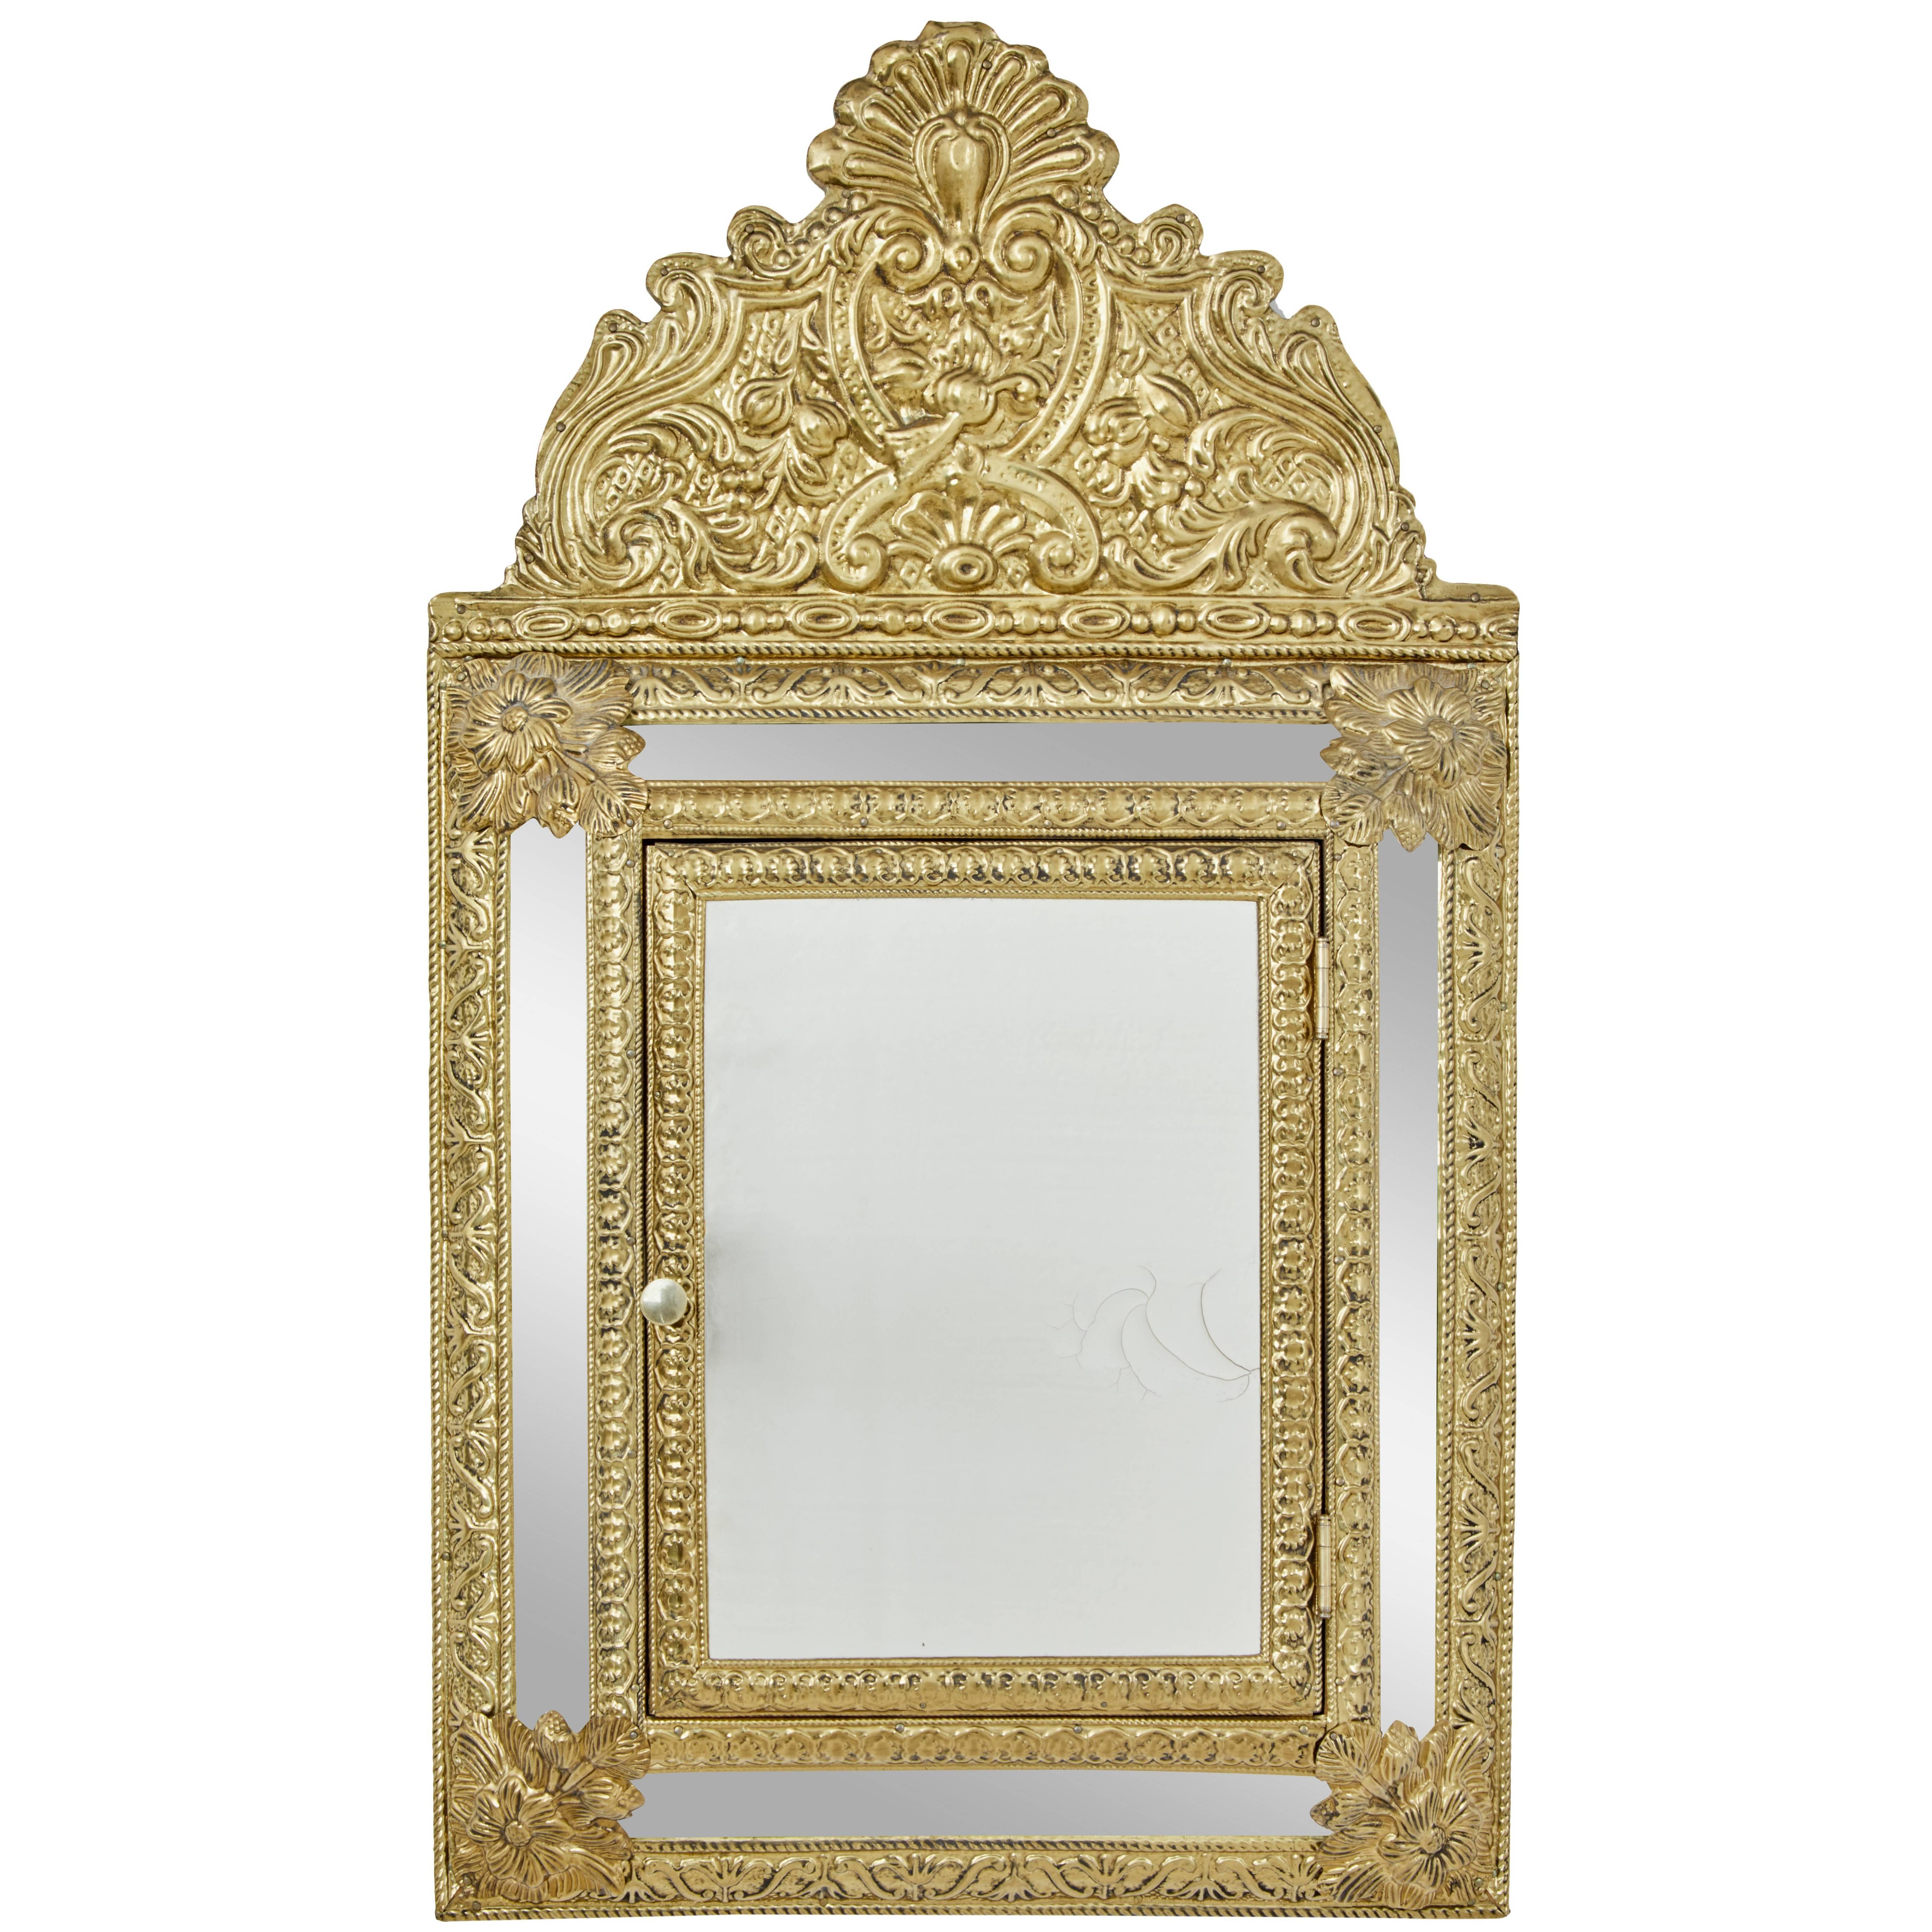 20th Century Aesthetic Movement Inspired Brass Hall Cushion Mirror